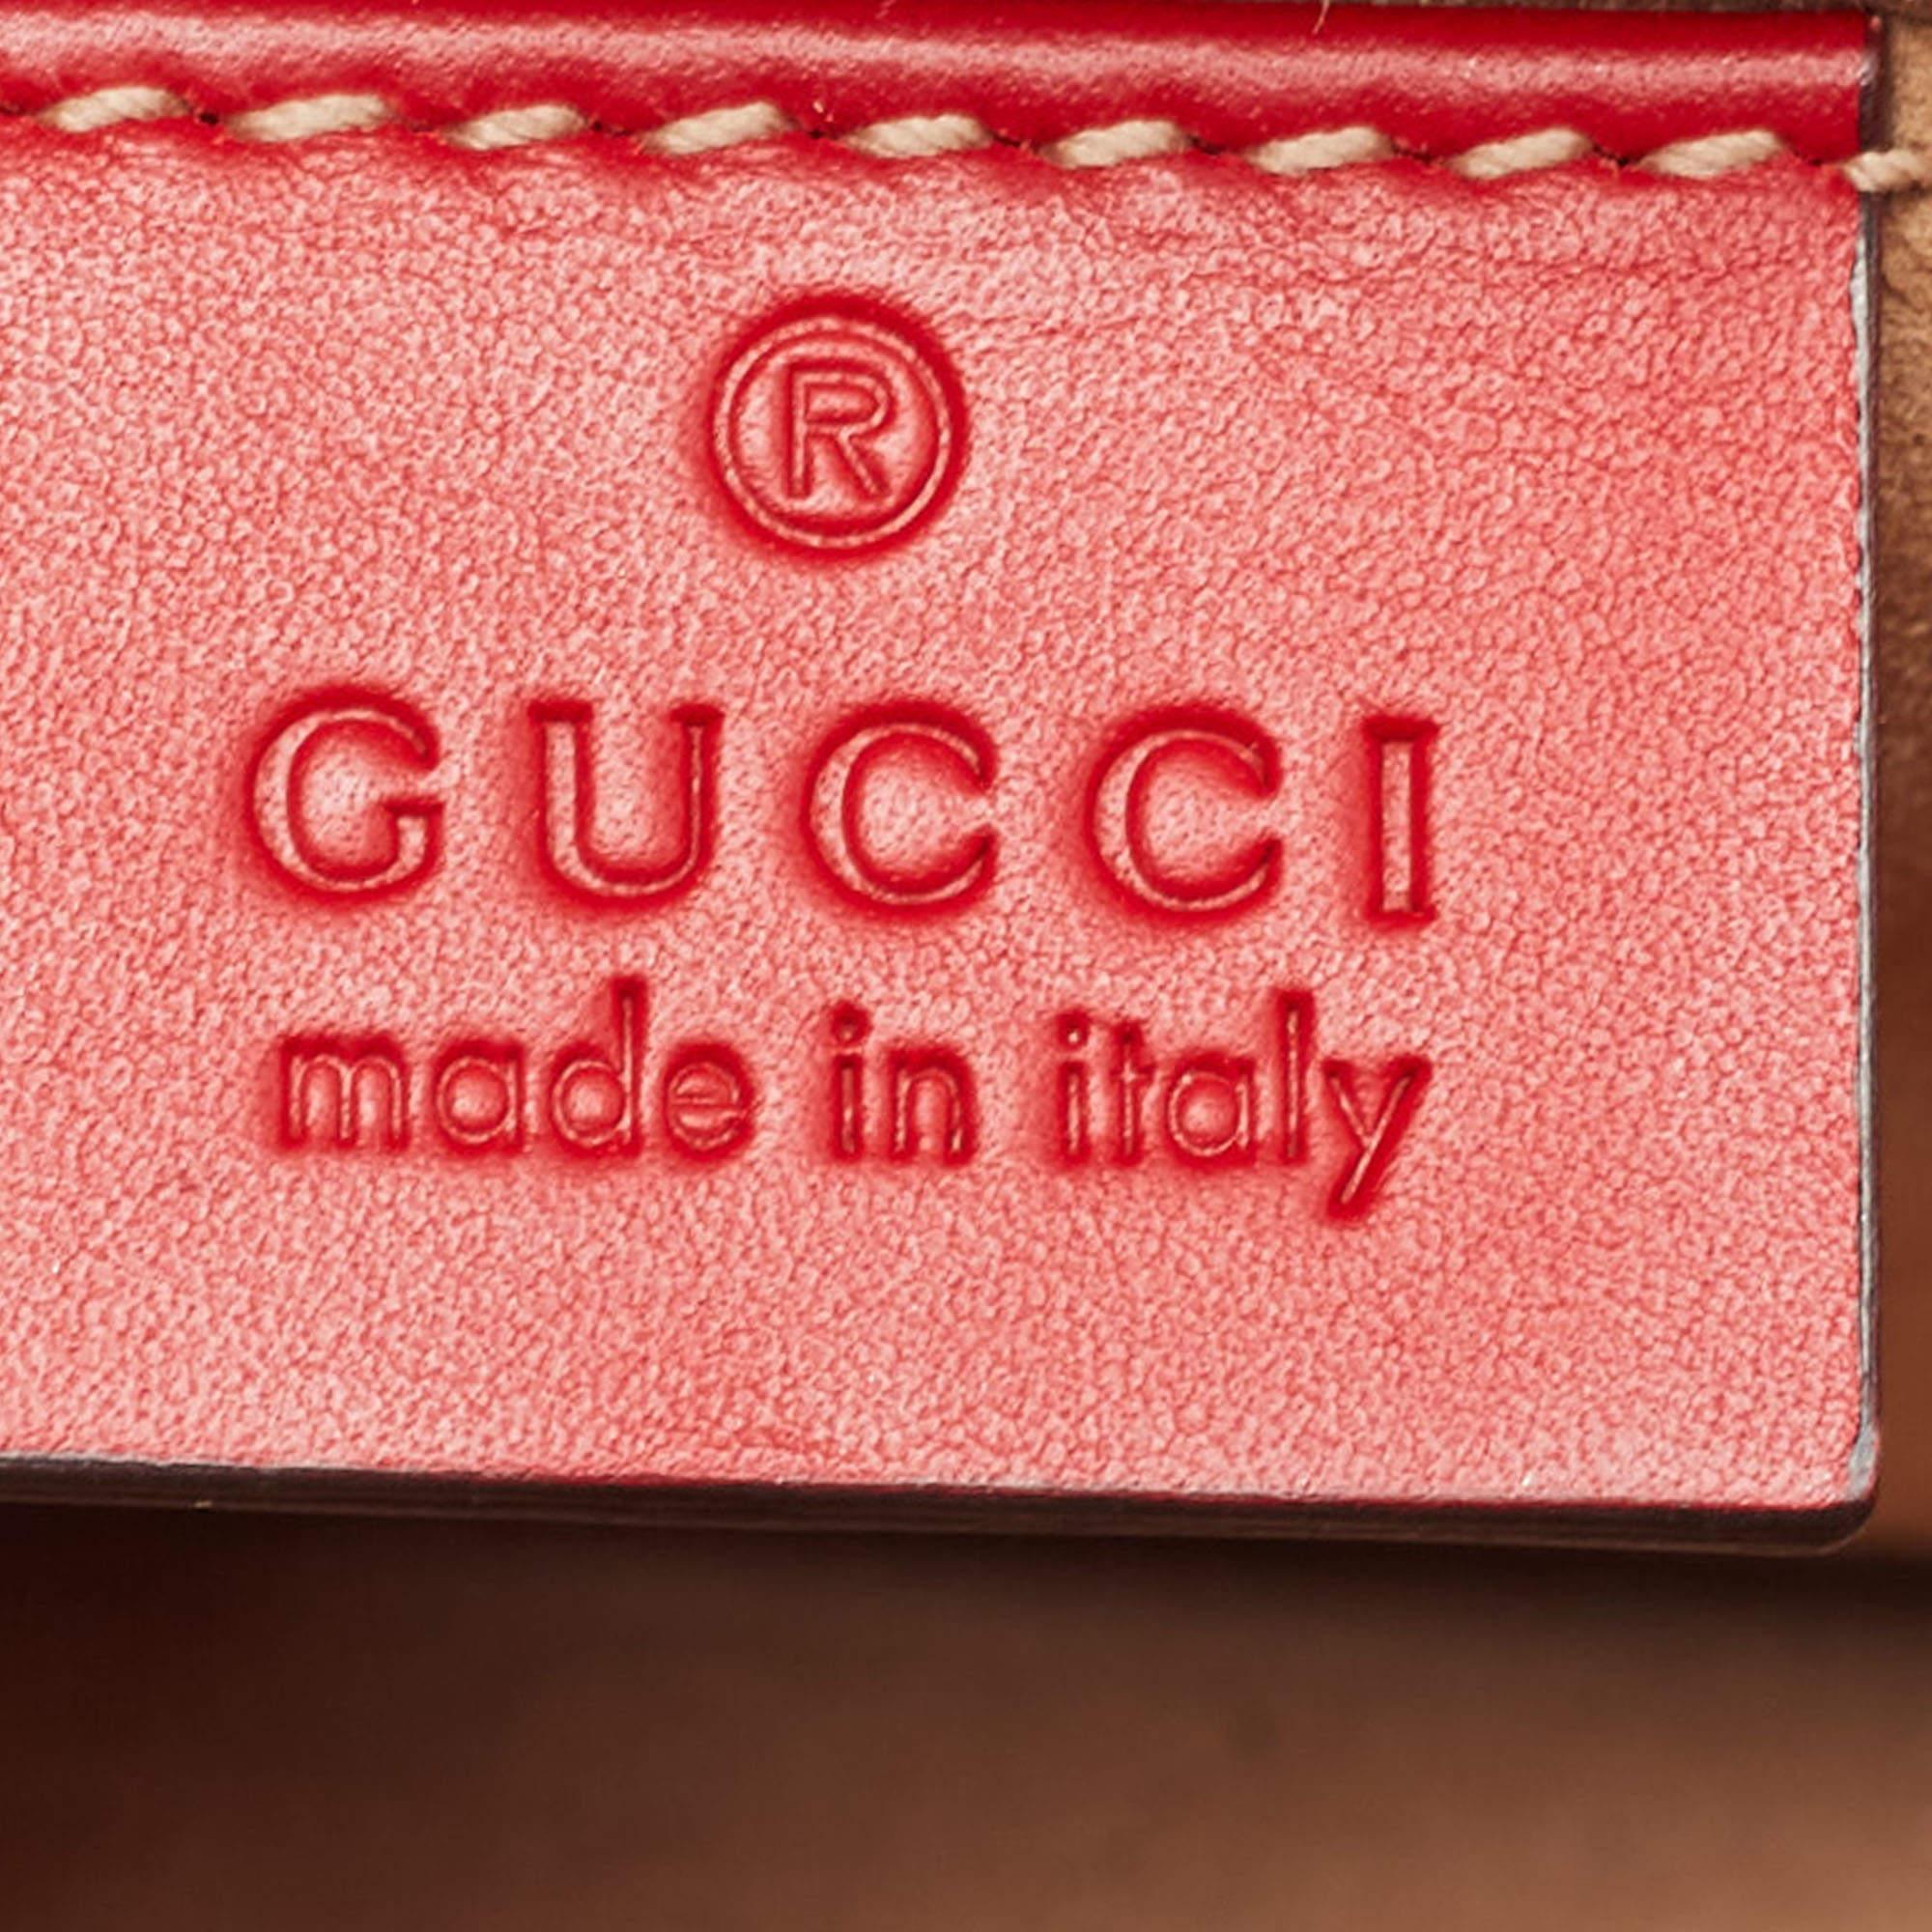 Gucci Red Leather Mini Web Chain Sylvie Crossbody Bag 4